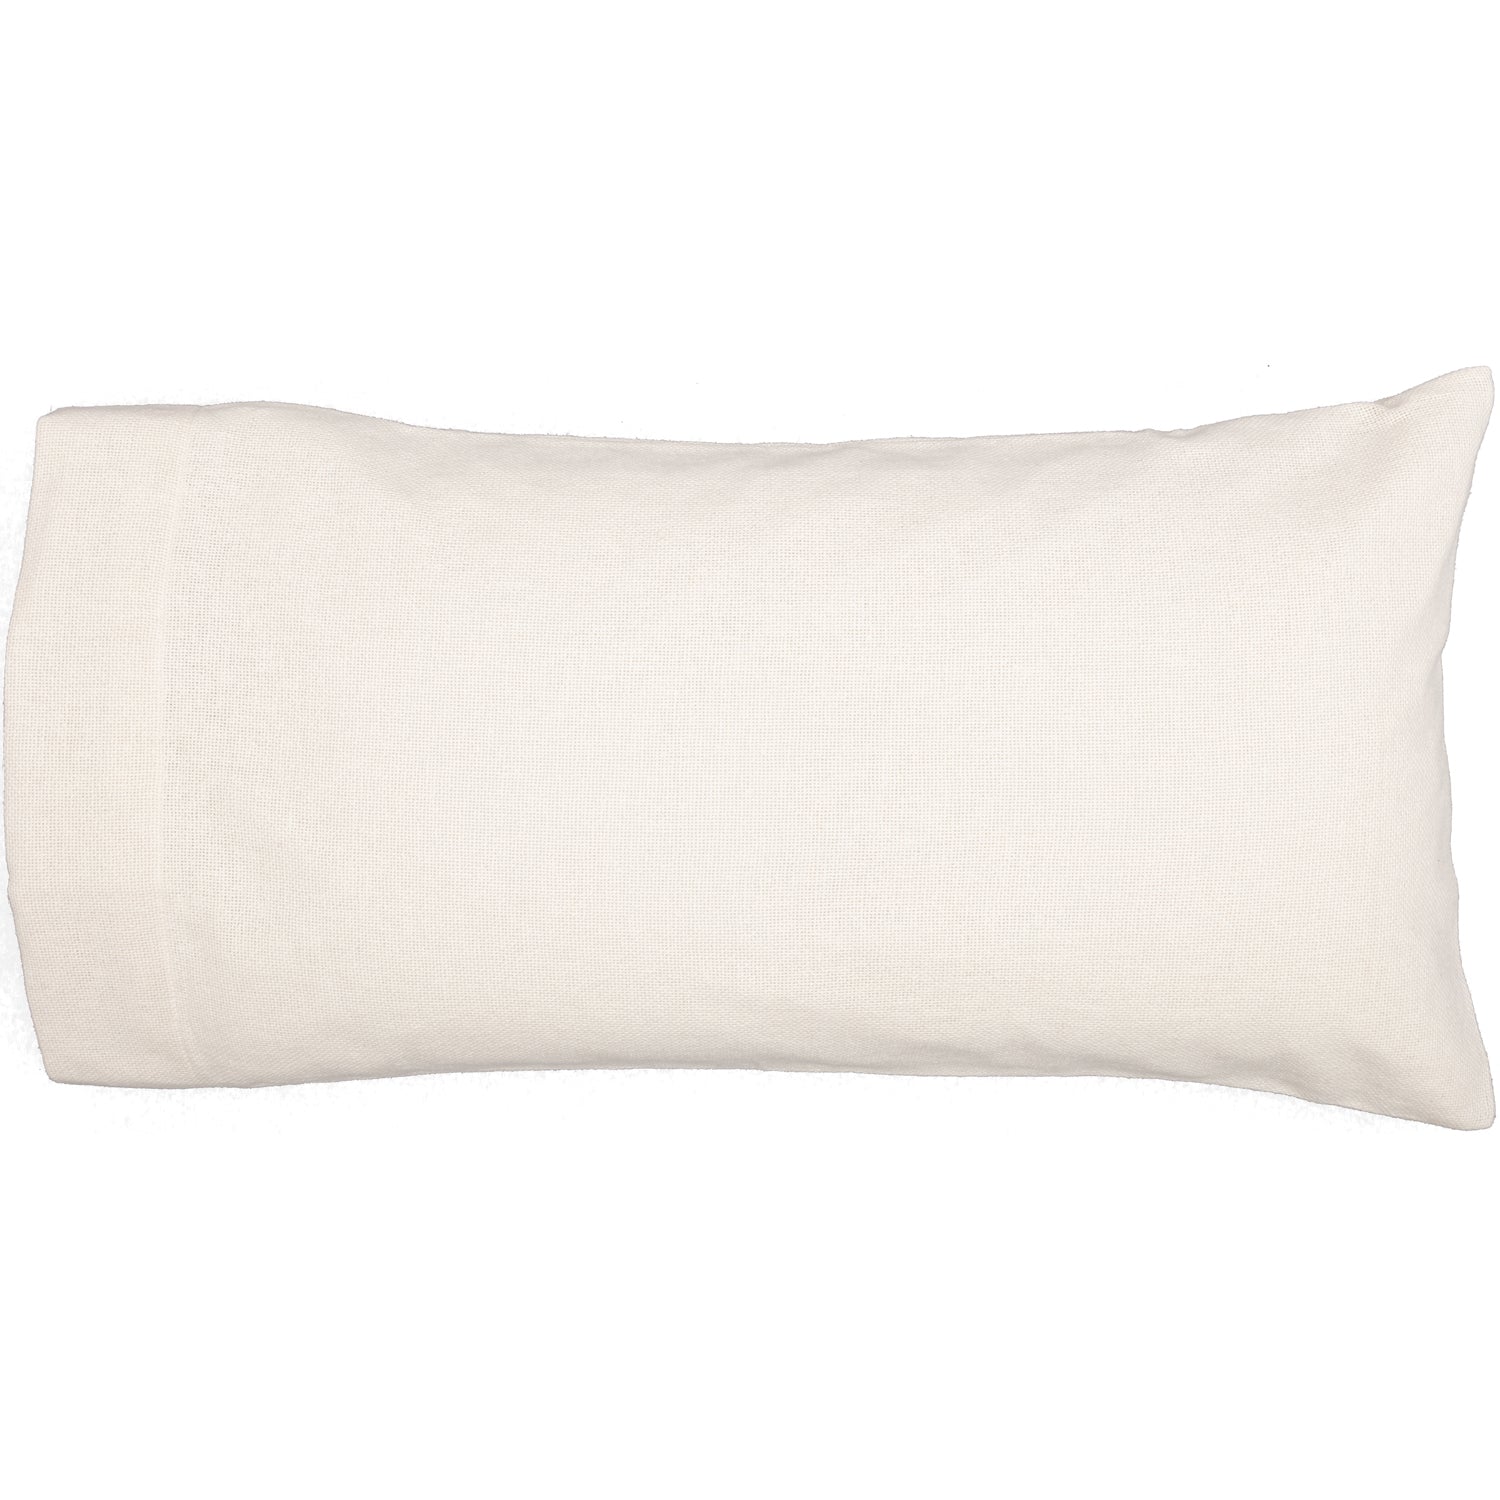 51811-Burlap-Antique-White-King-Pillow-Case-Set-of-2-21x40-image-6